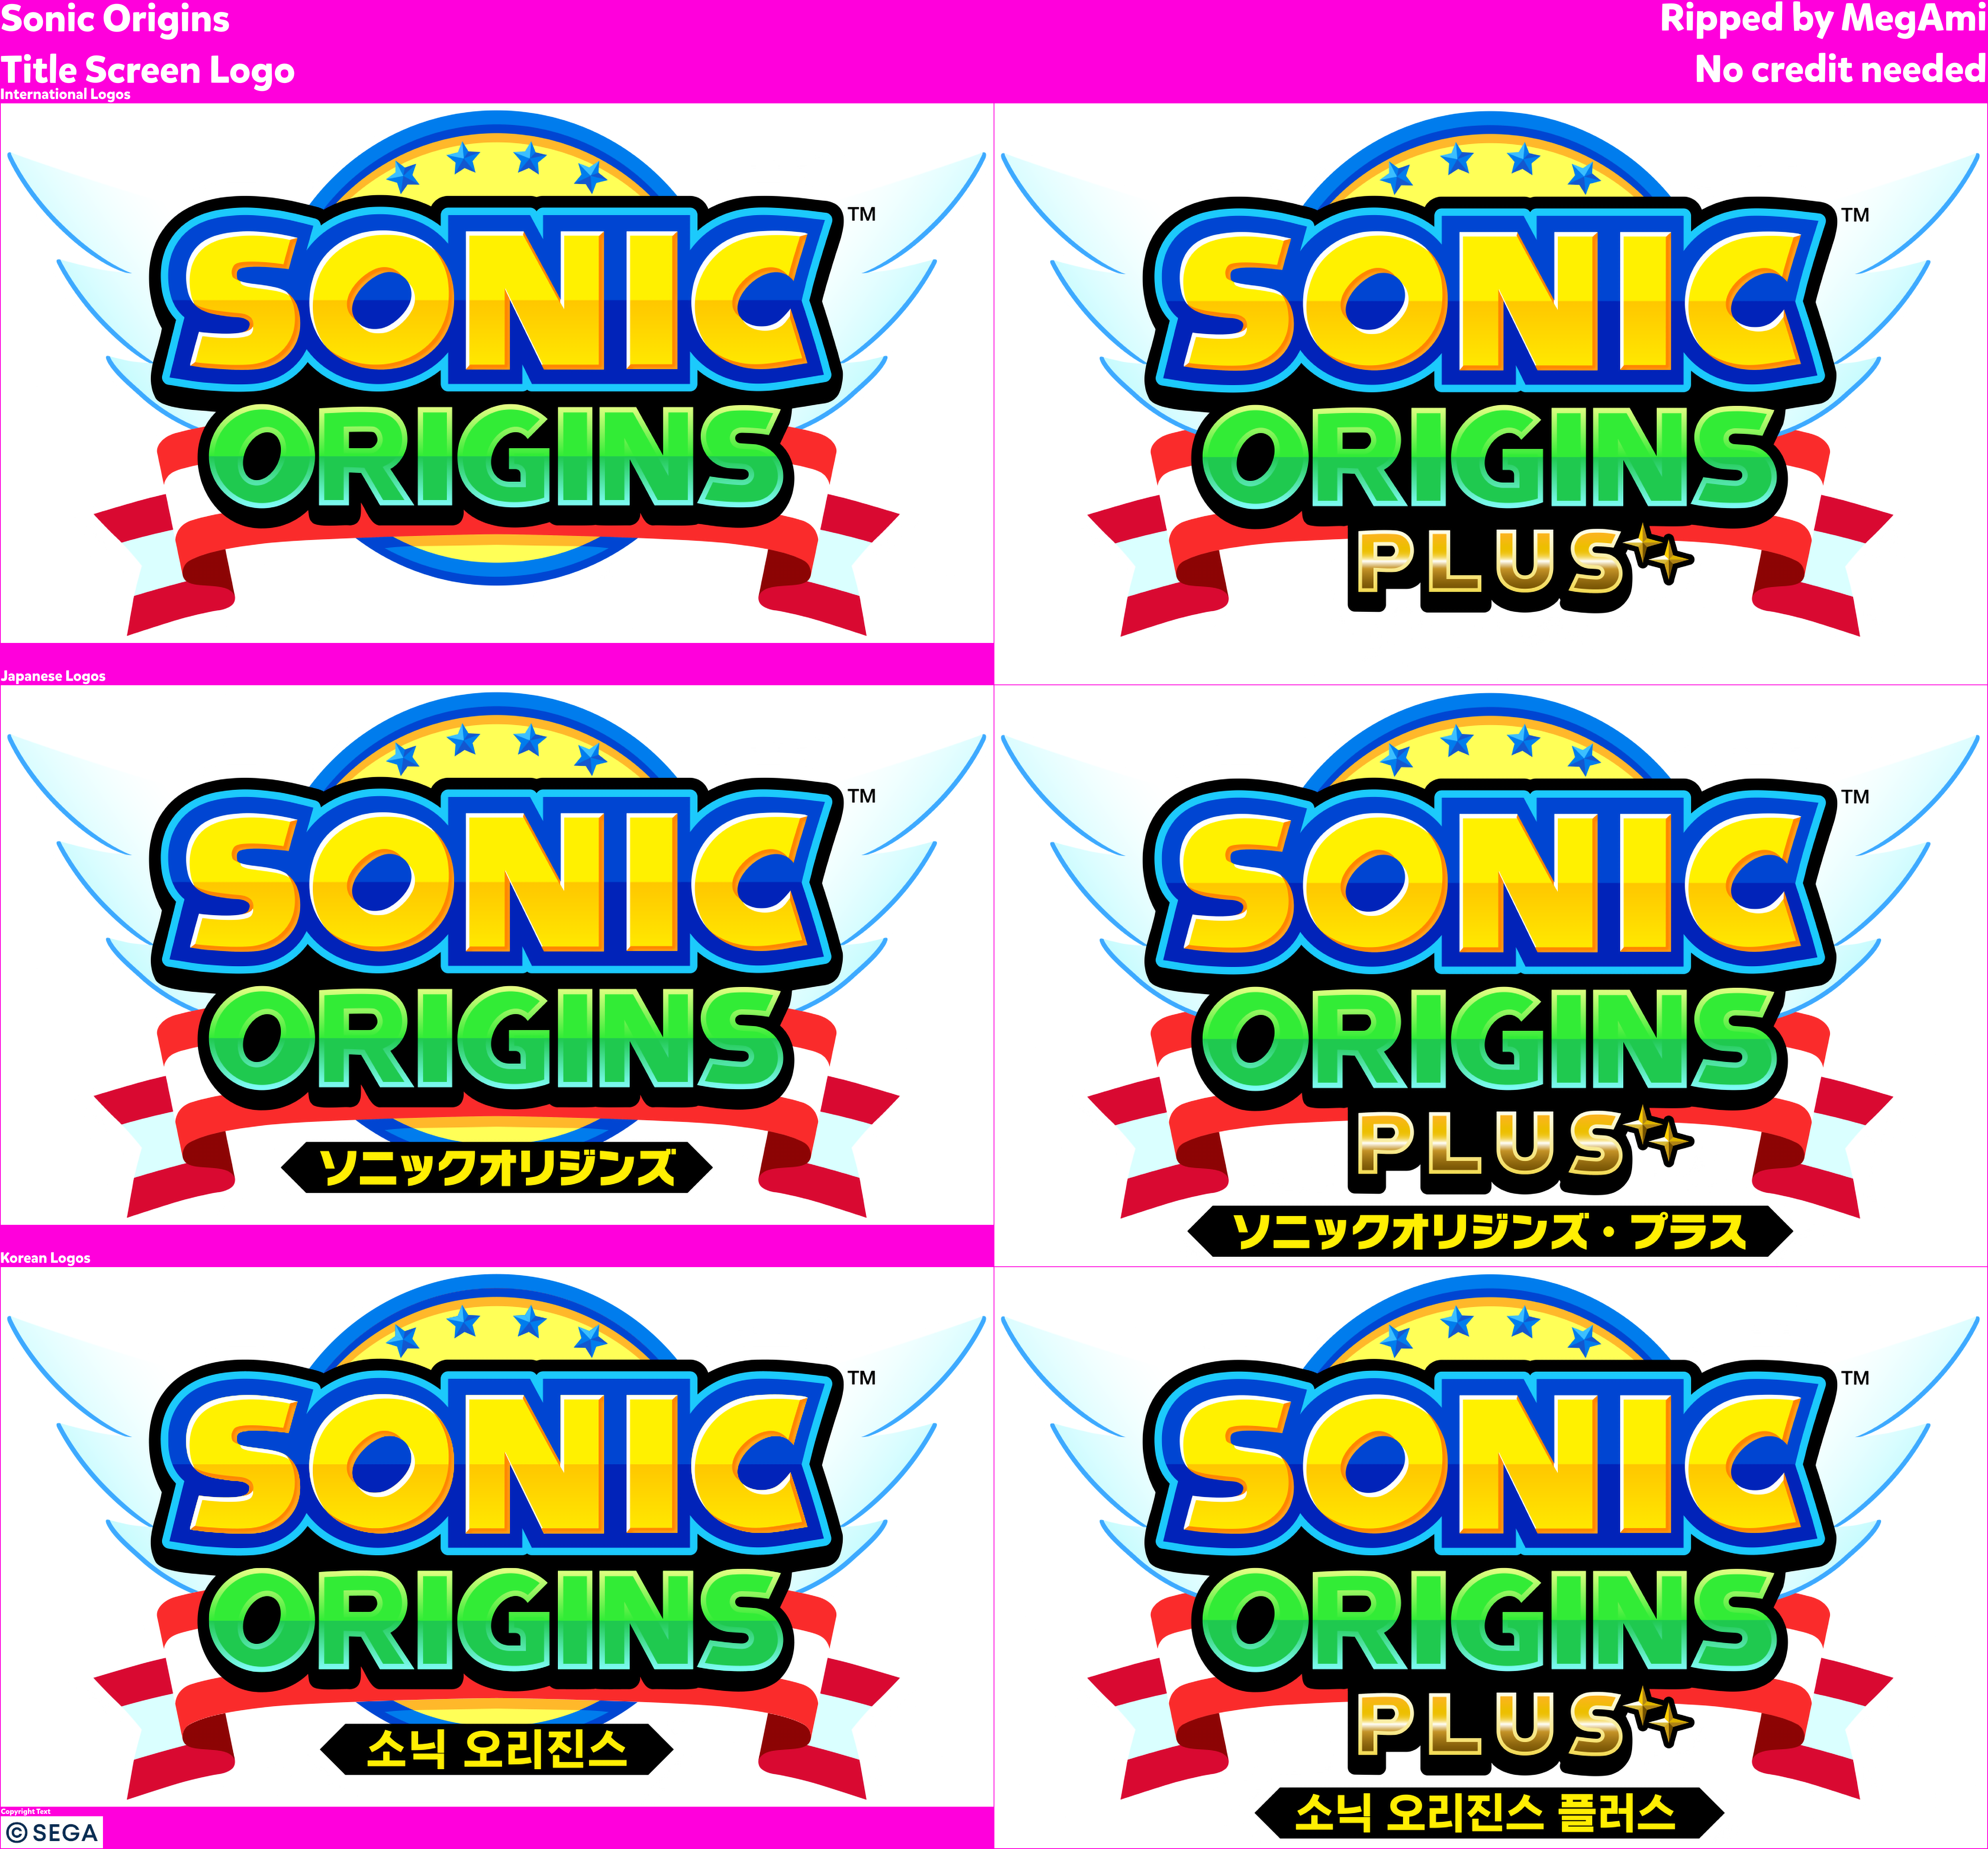 Sonic Origins - Title Screen Logo